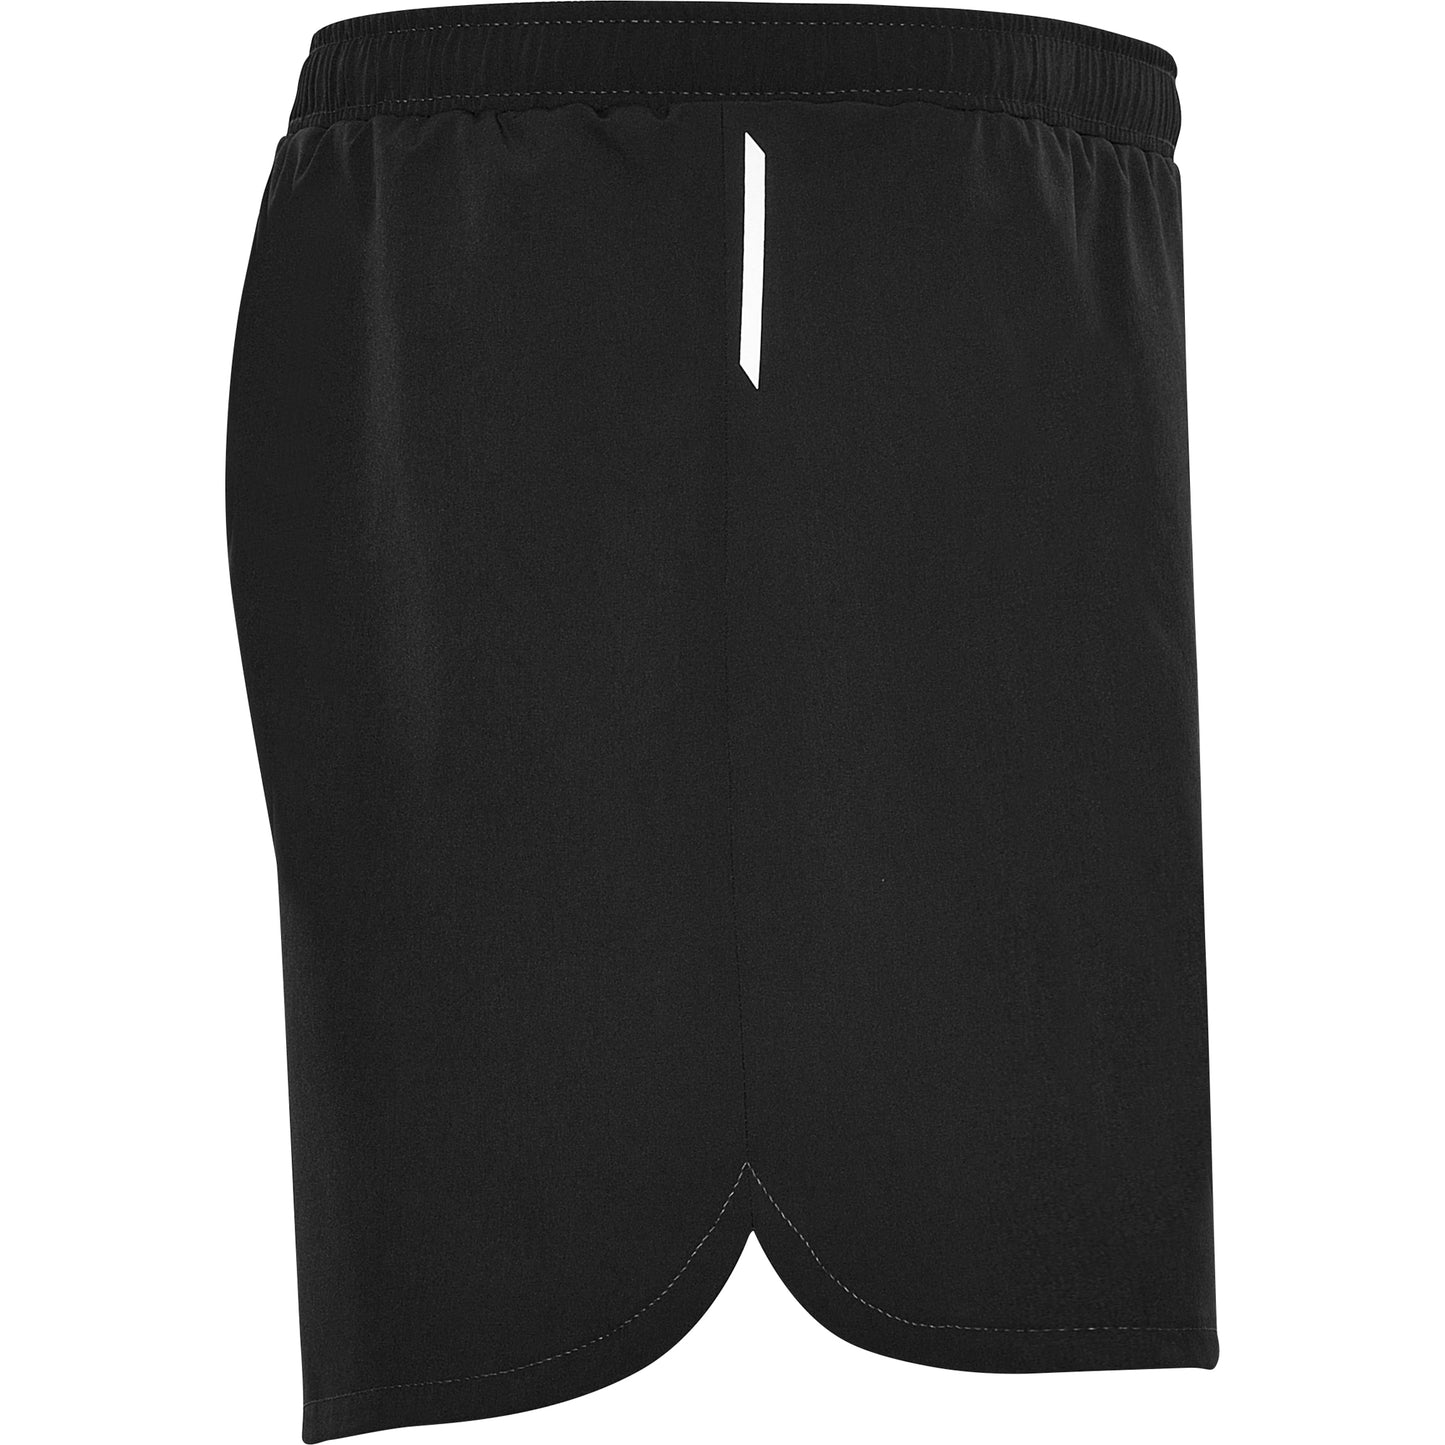 Pantalón corto deportivo con slip interior - Hombre  - Calcio